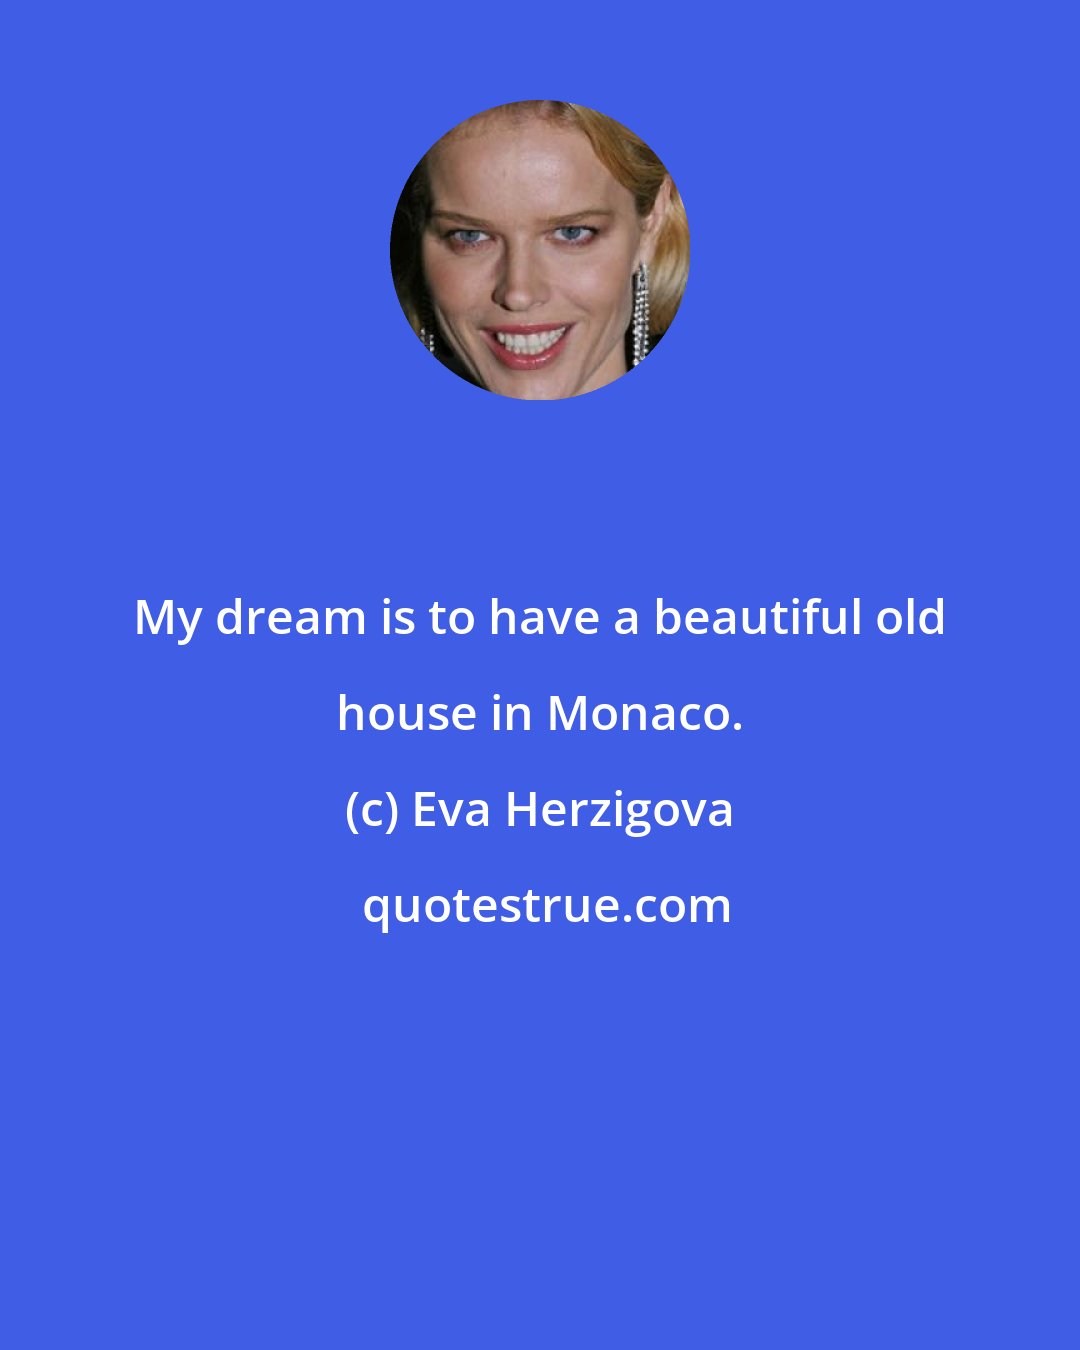 Eva Herzigova: My dream is to have a beautiful old house in Monaco.